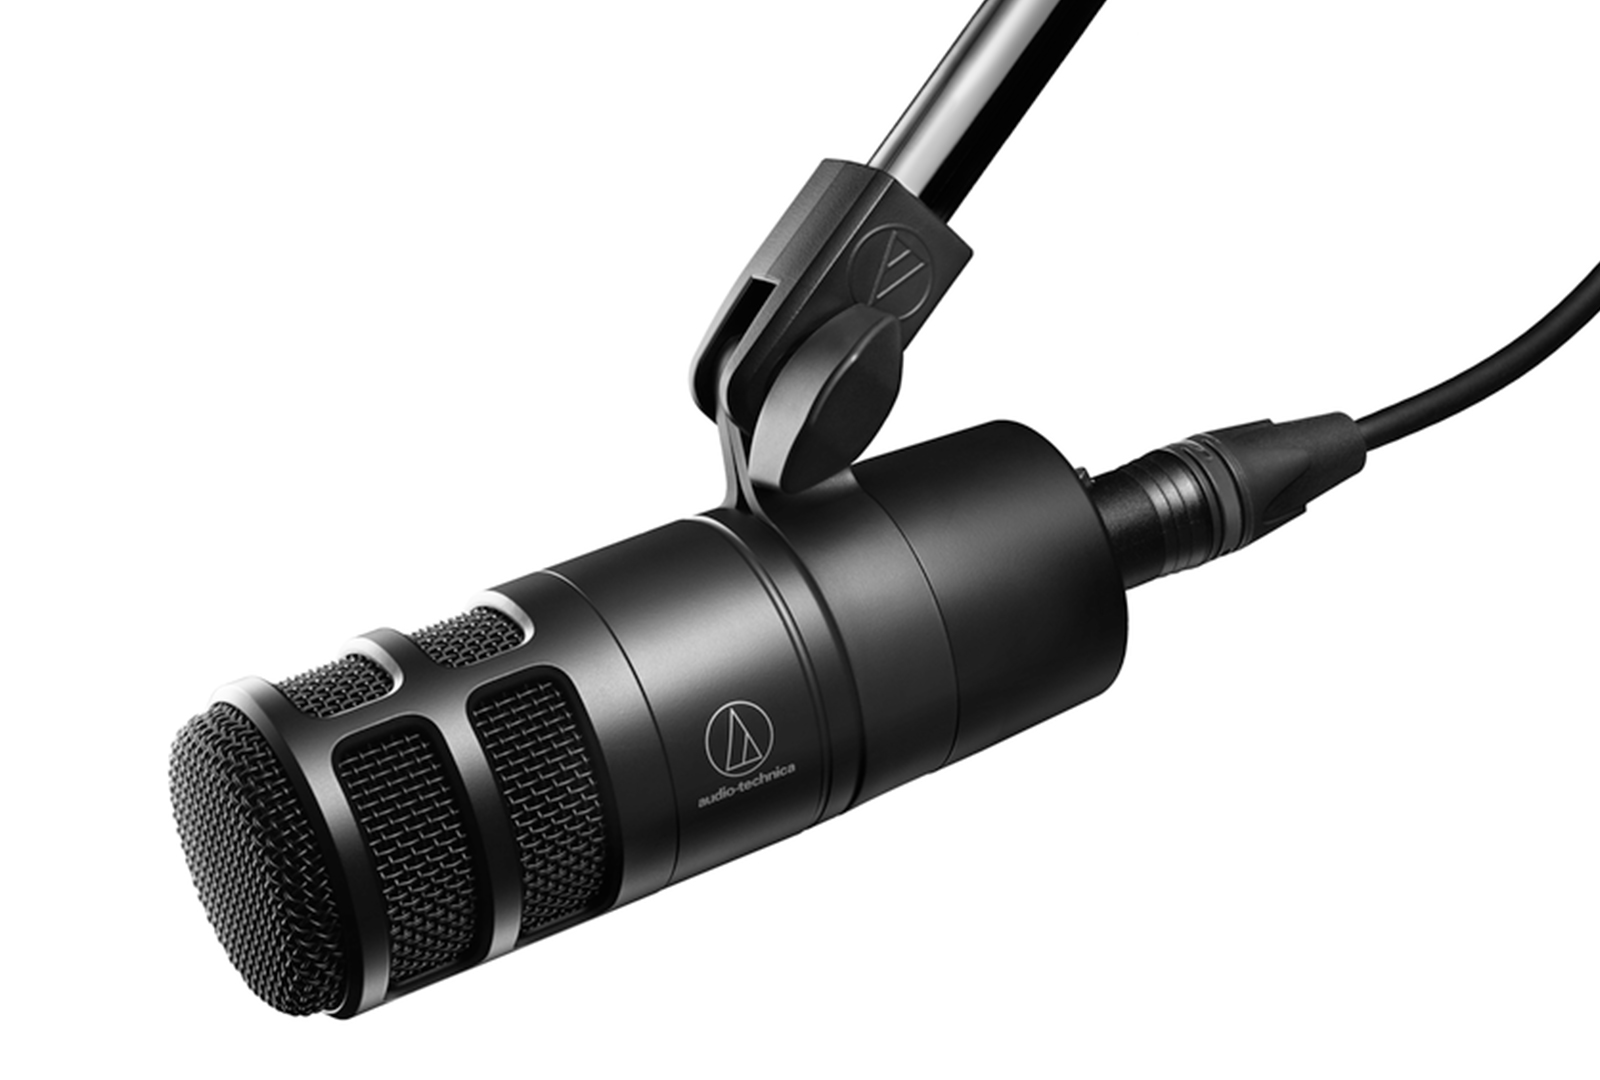 Audio-Technica launches entry-level studio microphone